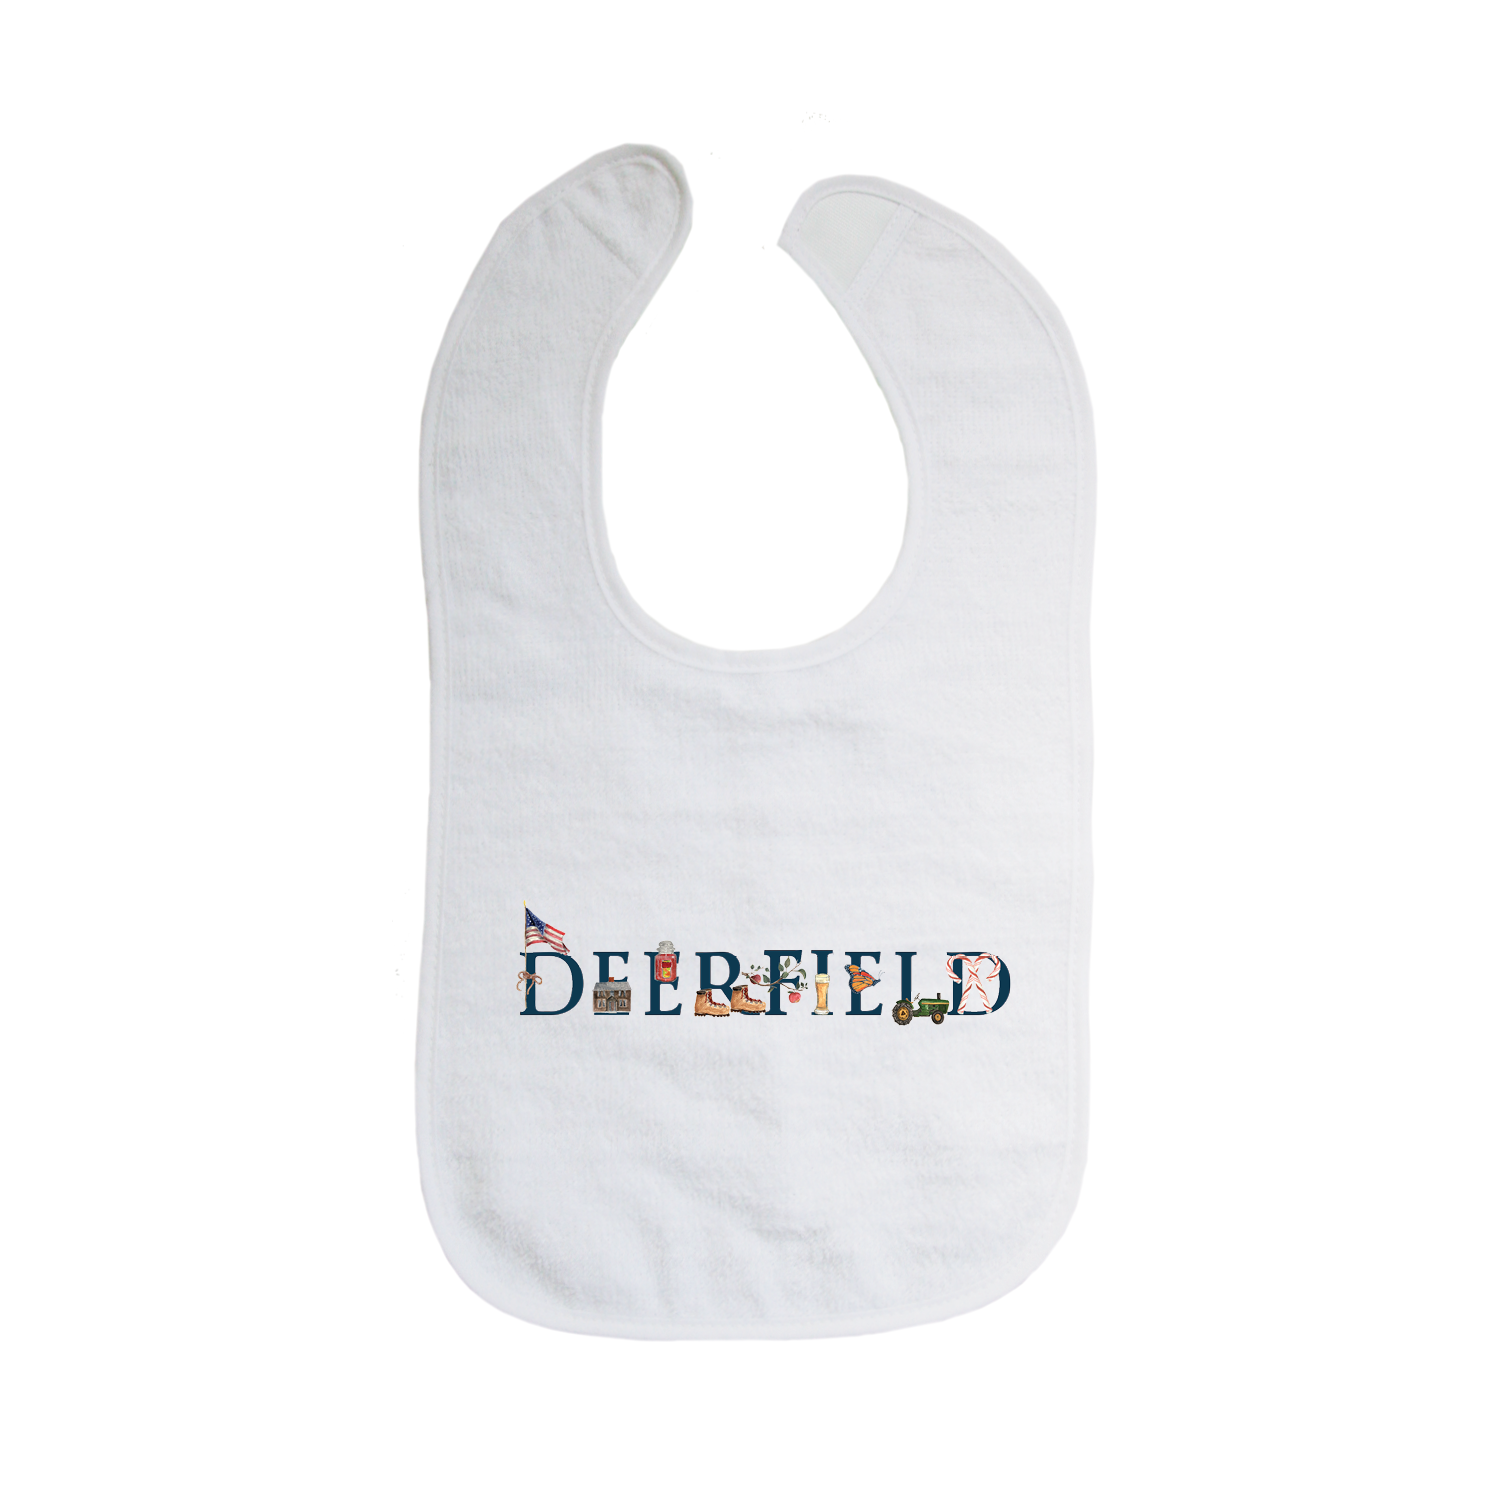 deerfield bib